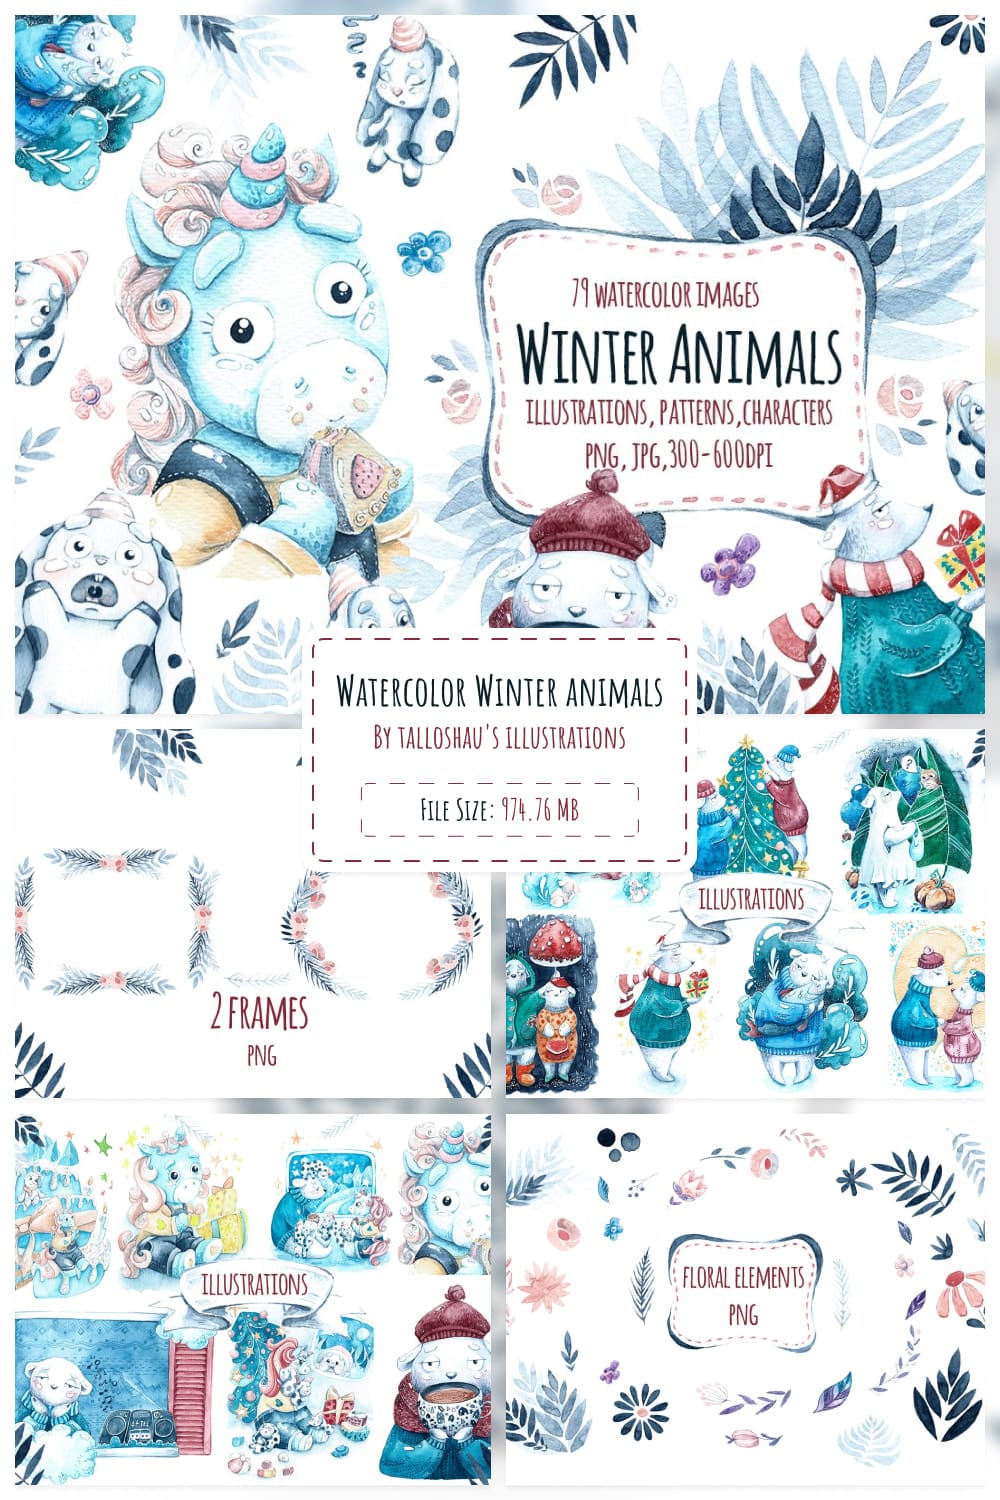 Watercolor Winter animals Pinterest.